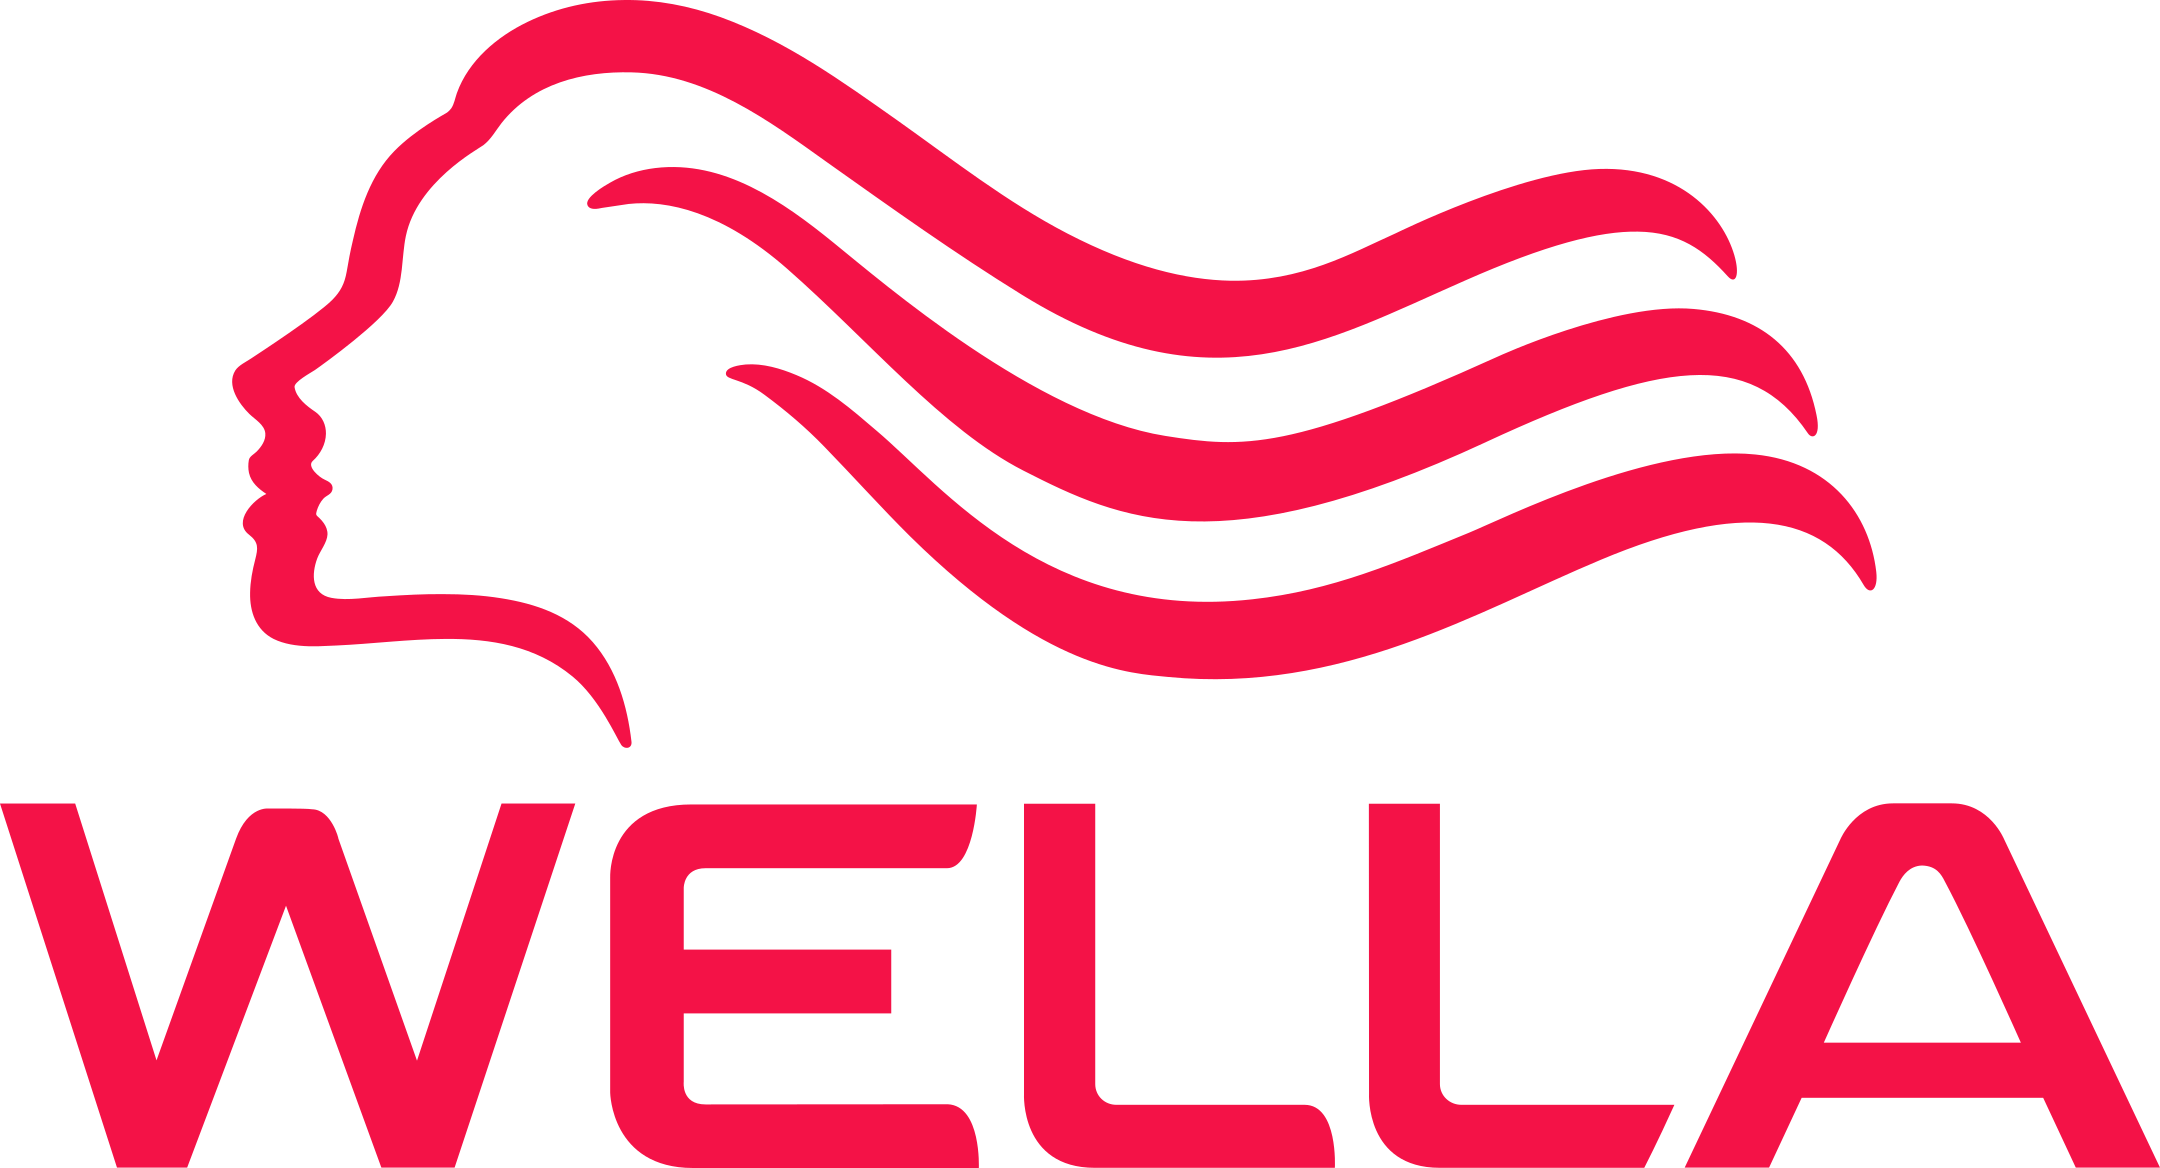 wella logo 1 - Wella Logo